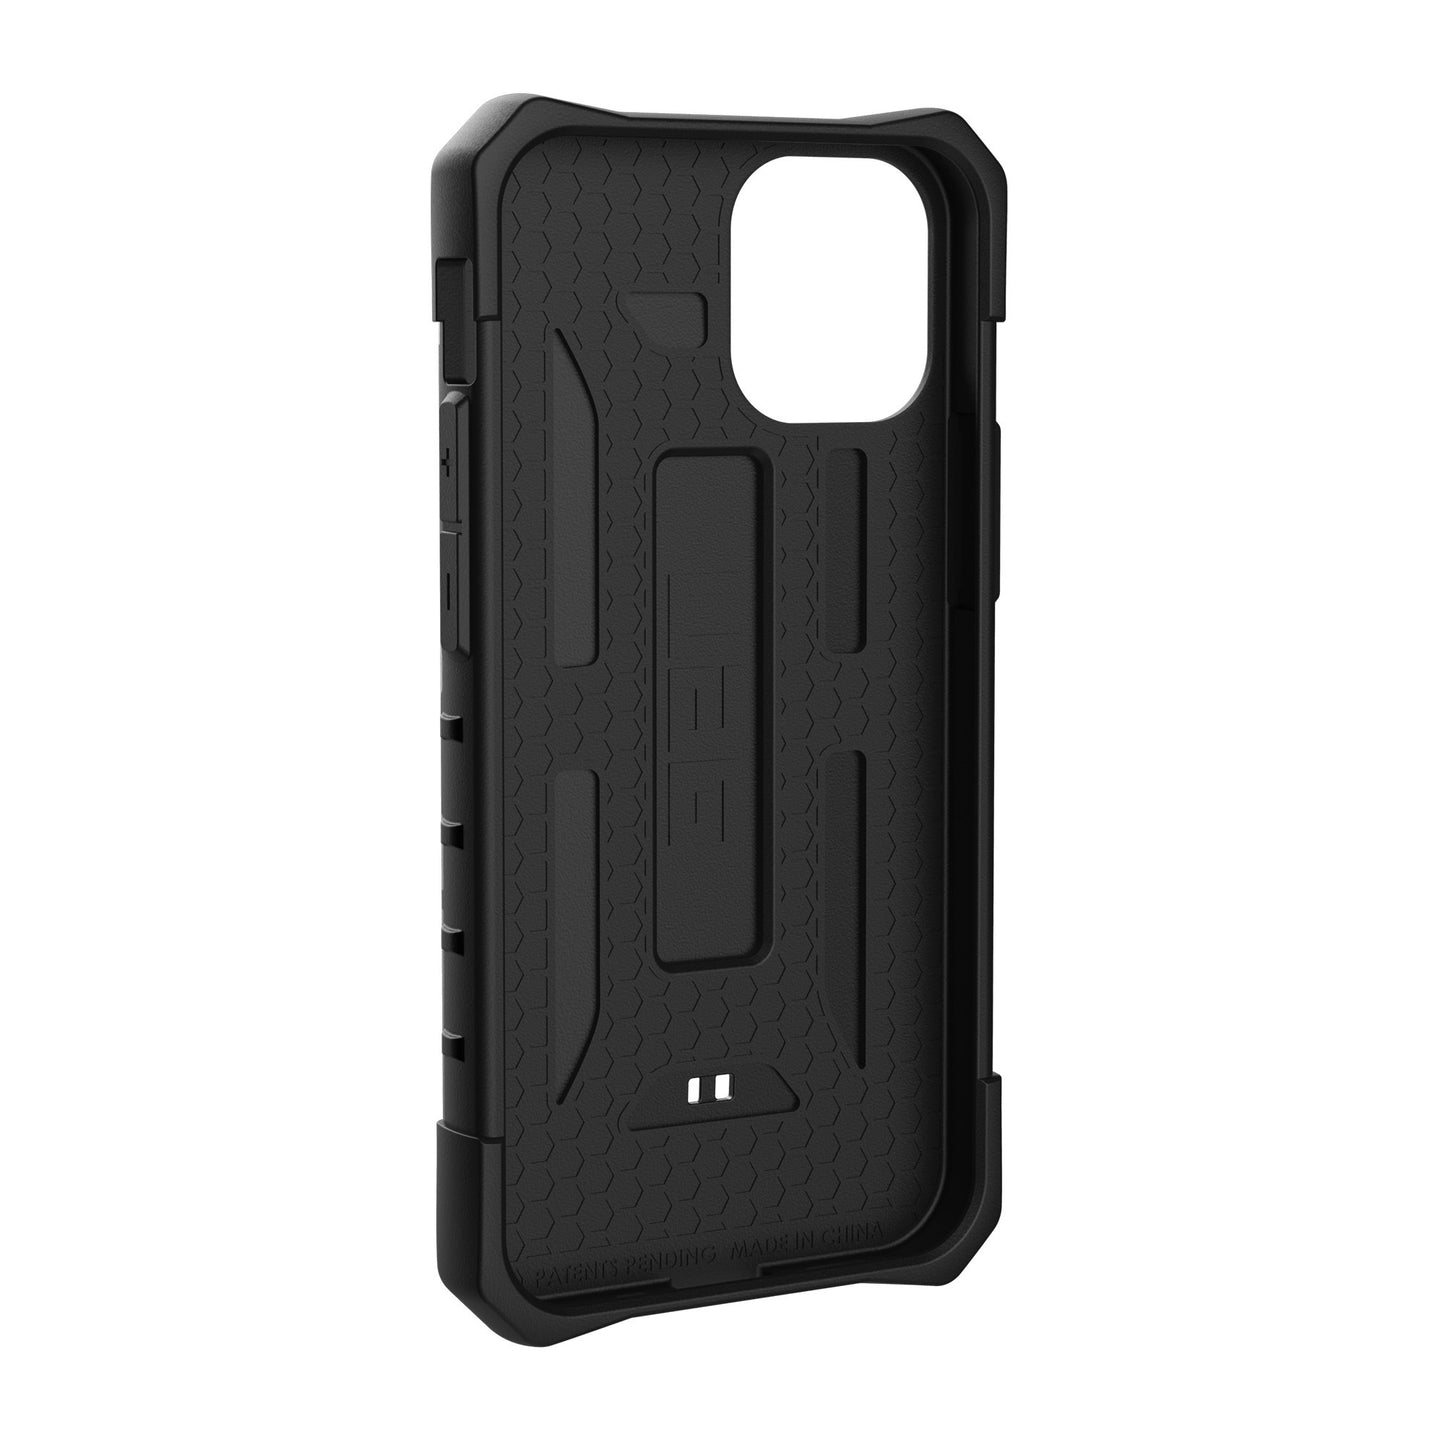 iPhone 12 Mini UAG Grey/Black (Midnight Camo) Pathfinder SE Case - 15-07493